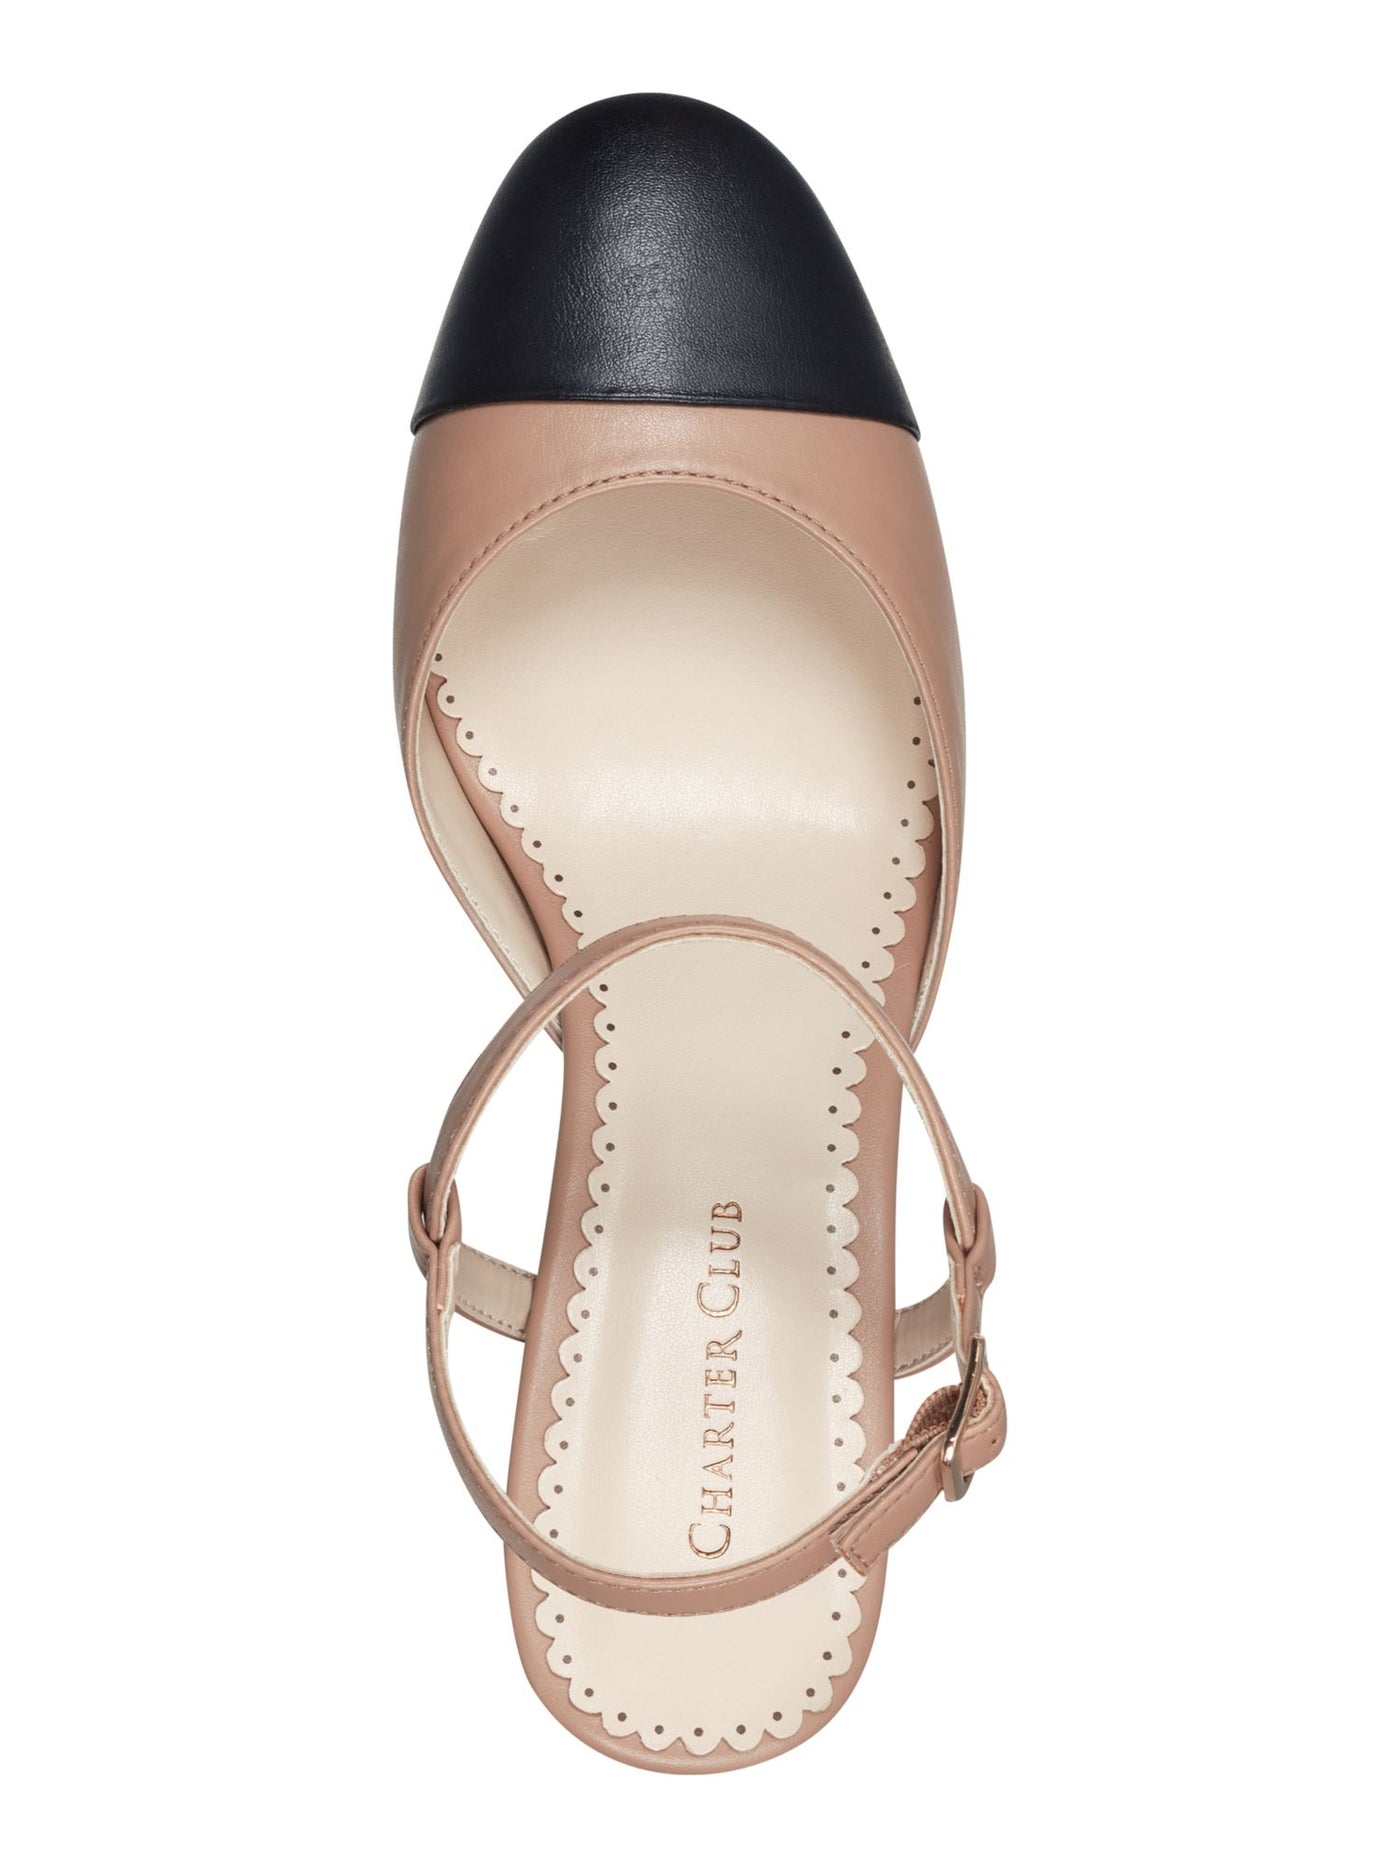 CHARTER CLUB Womens Beige Padded Adjustable Ankle Strap Dotti Cap Toe Block Heel Buckle Pumps Shoes 5 M